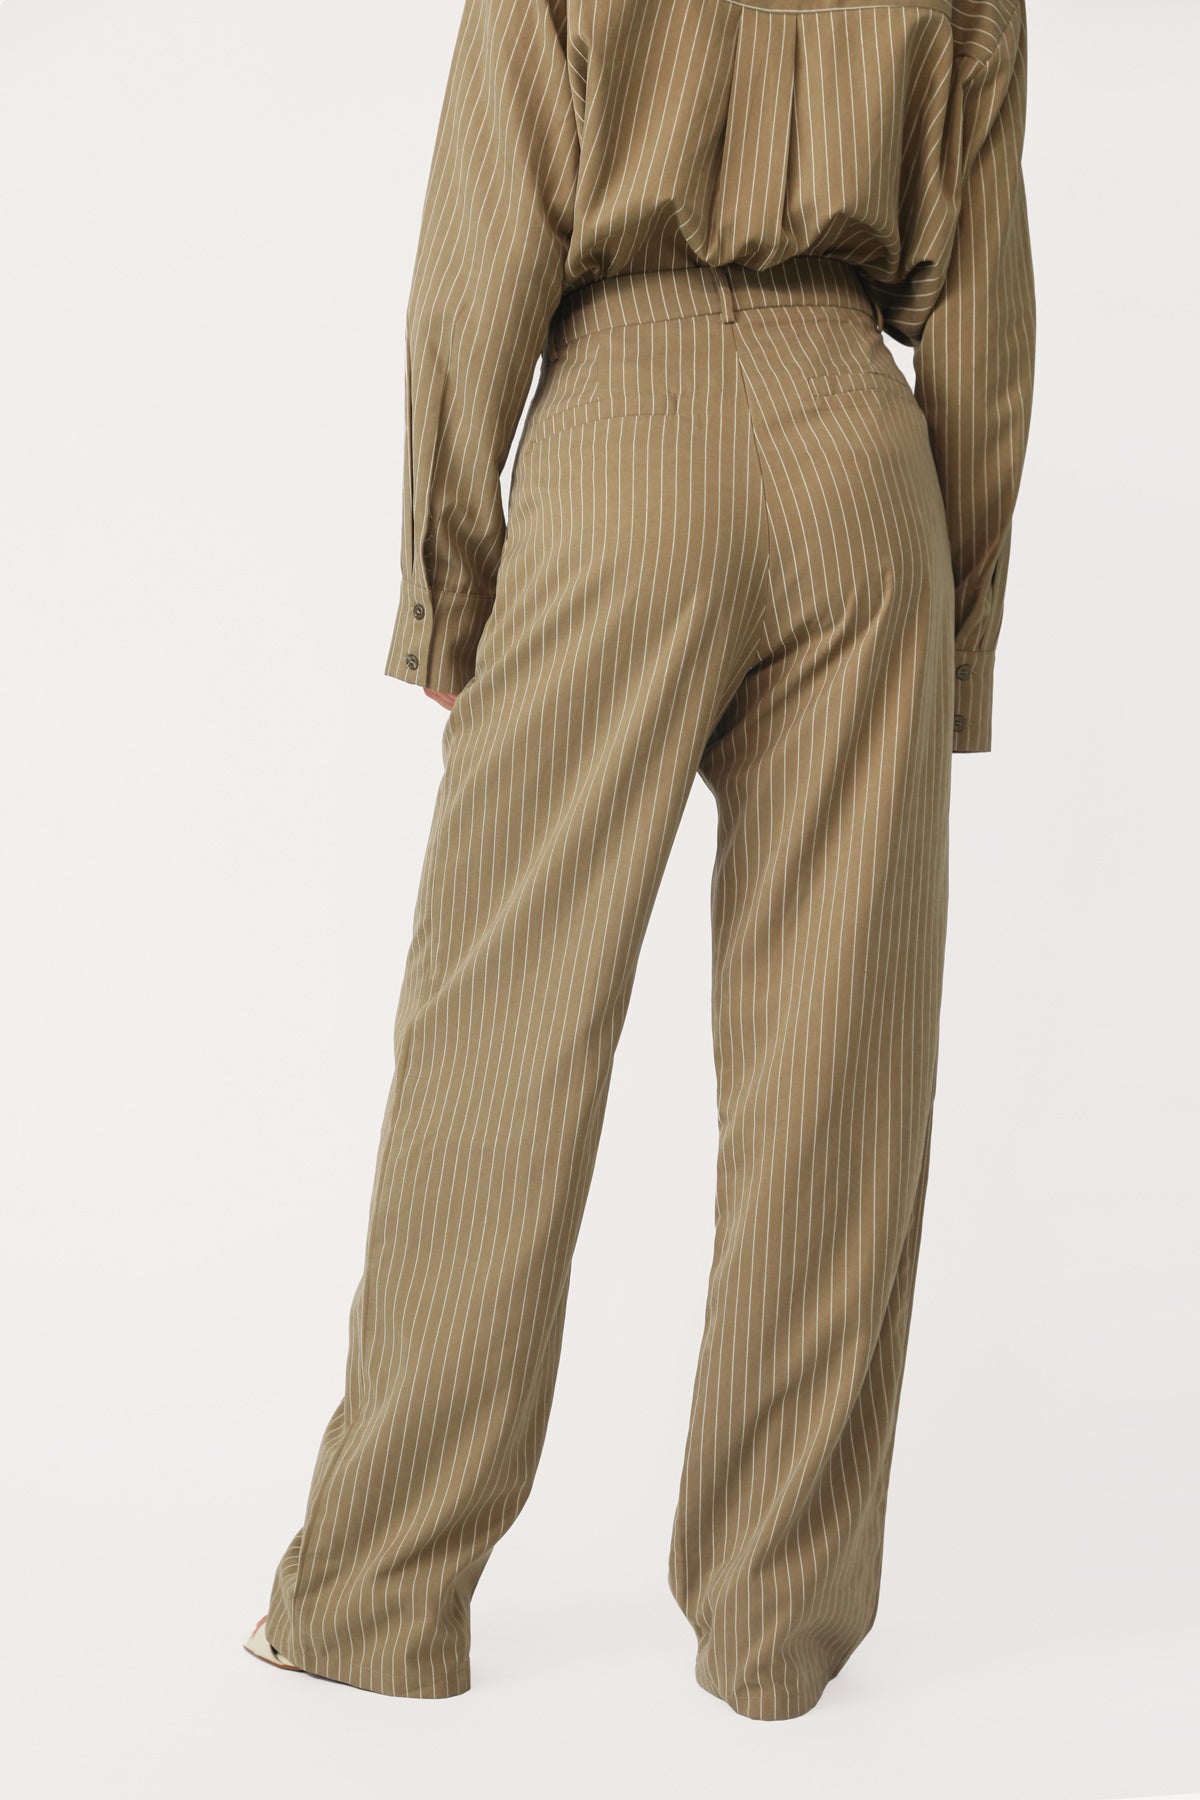 Model wearing the Midtown Babe Pinstripe Pant.